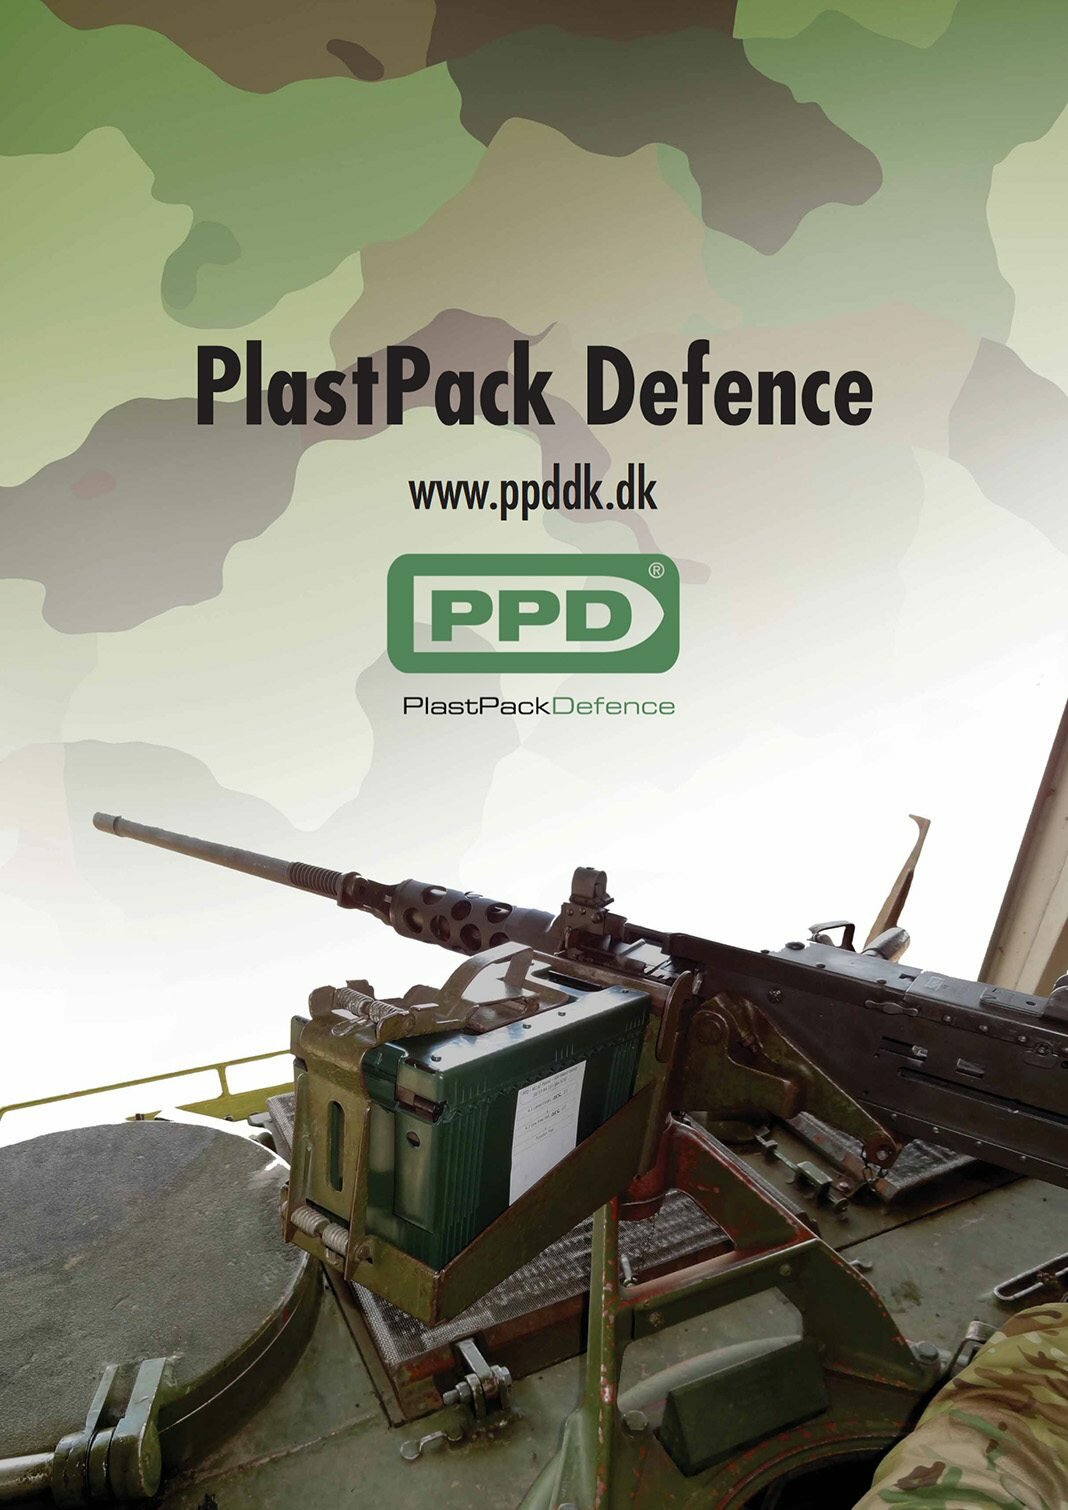 PlastPack Defence produces innovative ammunition solutions